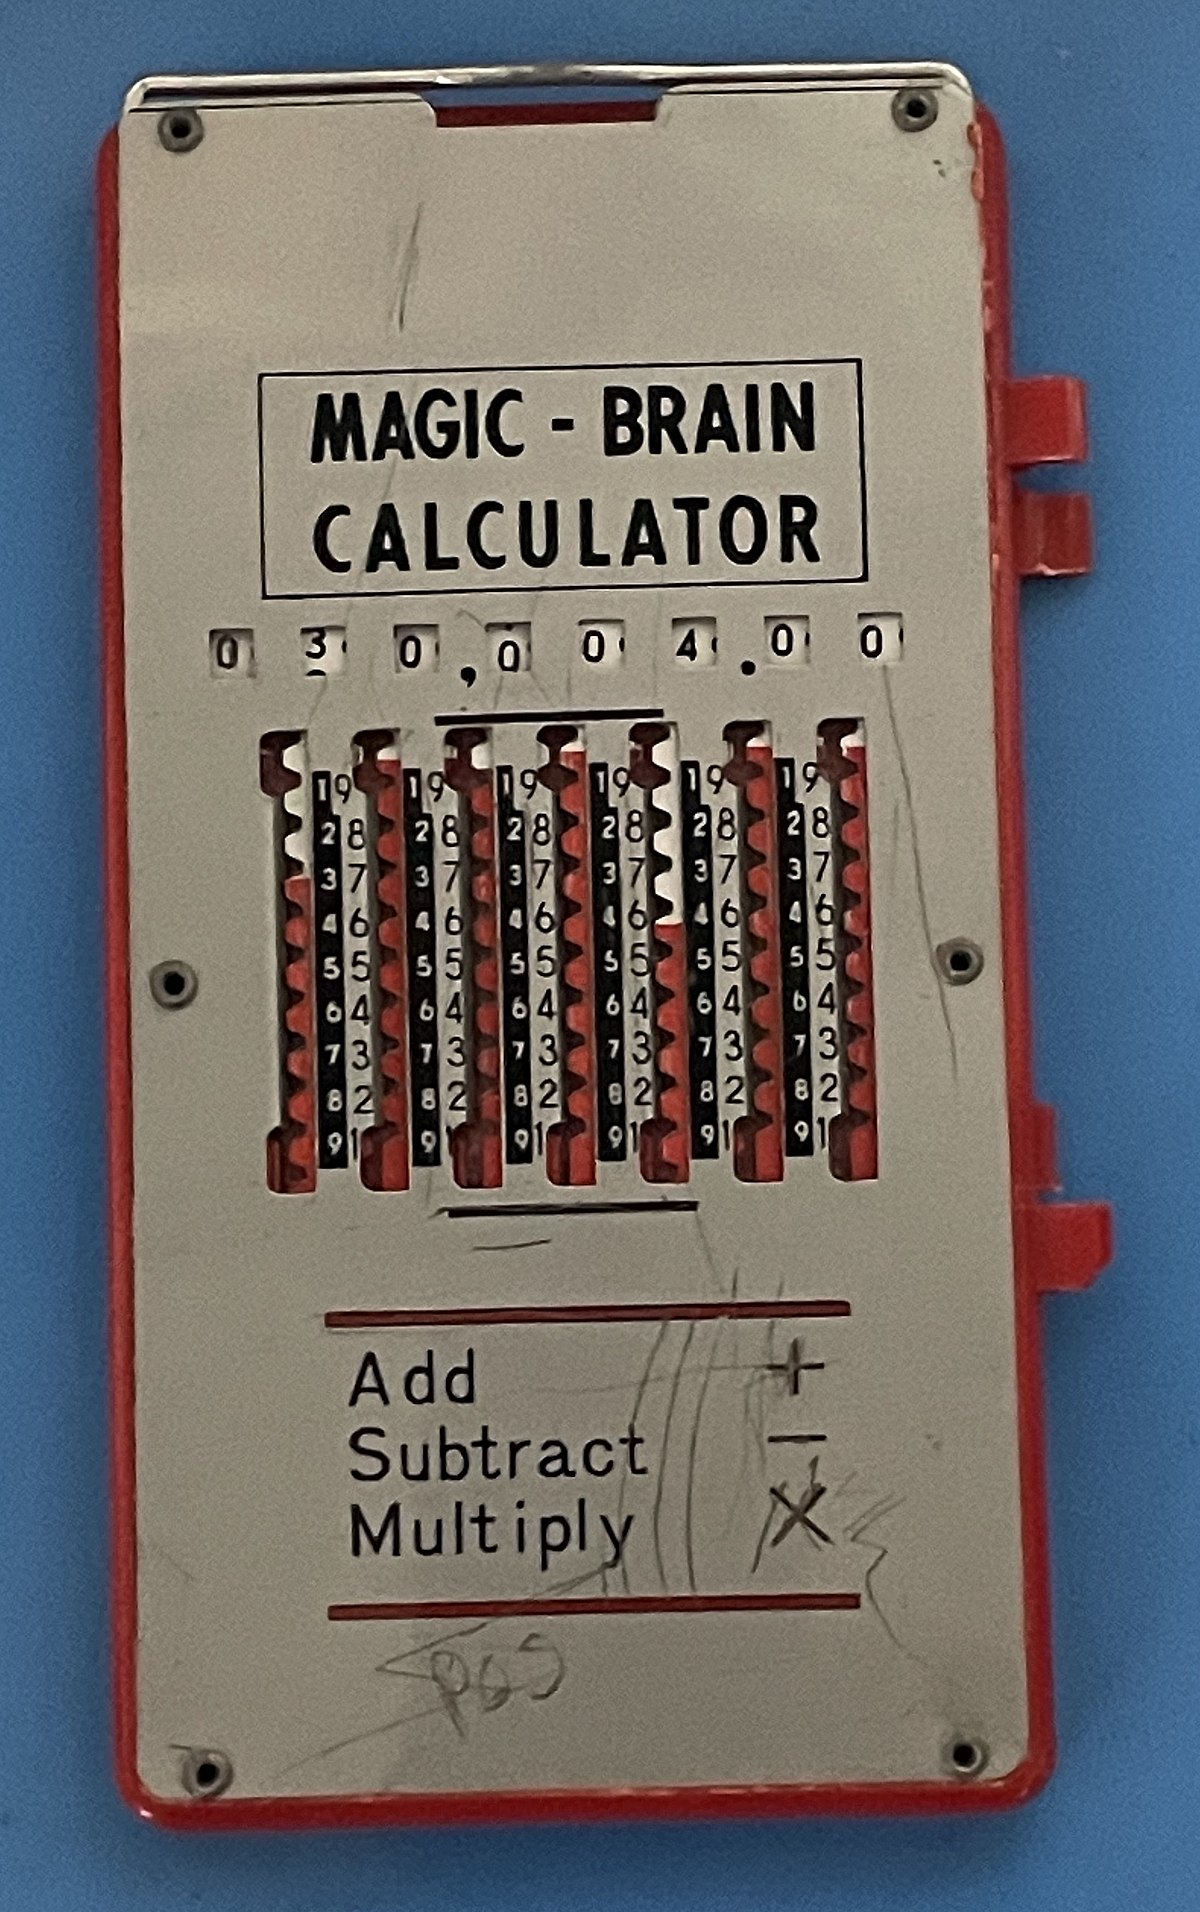 Magic Brain Calculator - How to Subtract 